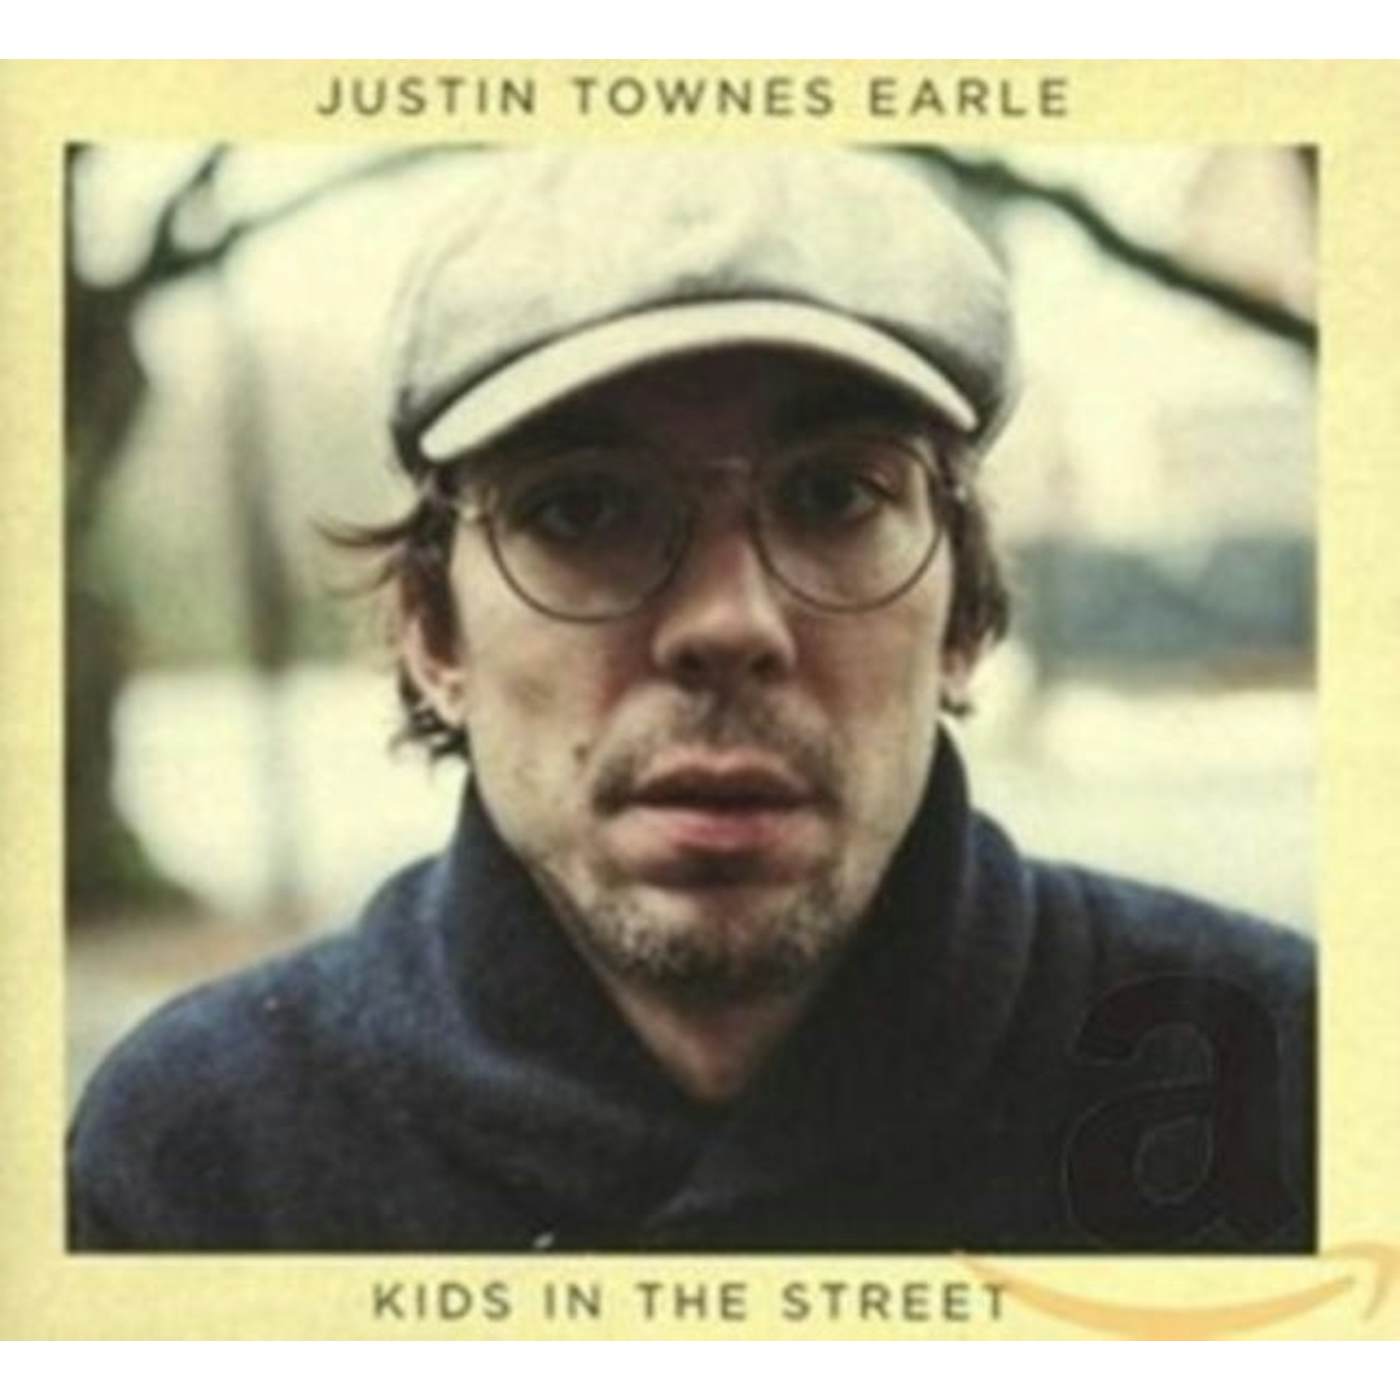 Justin Townes Earle LP Vinyl Record - Kids In The Street (Blue/Green/Tan Vinyl)